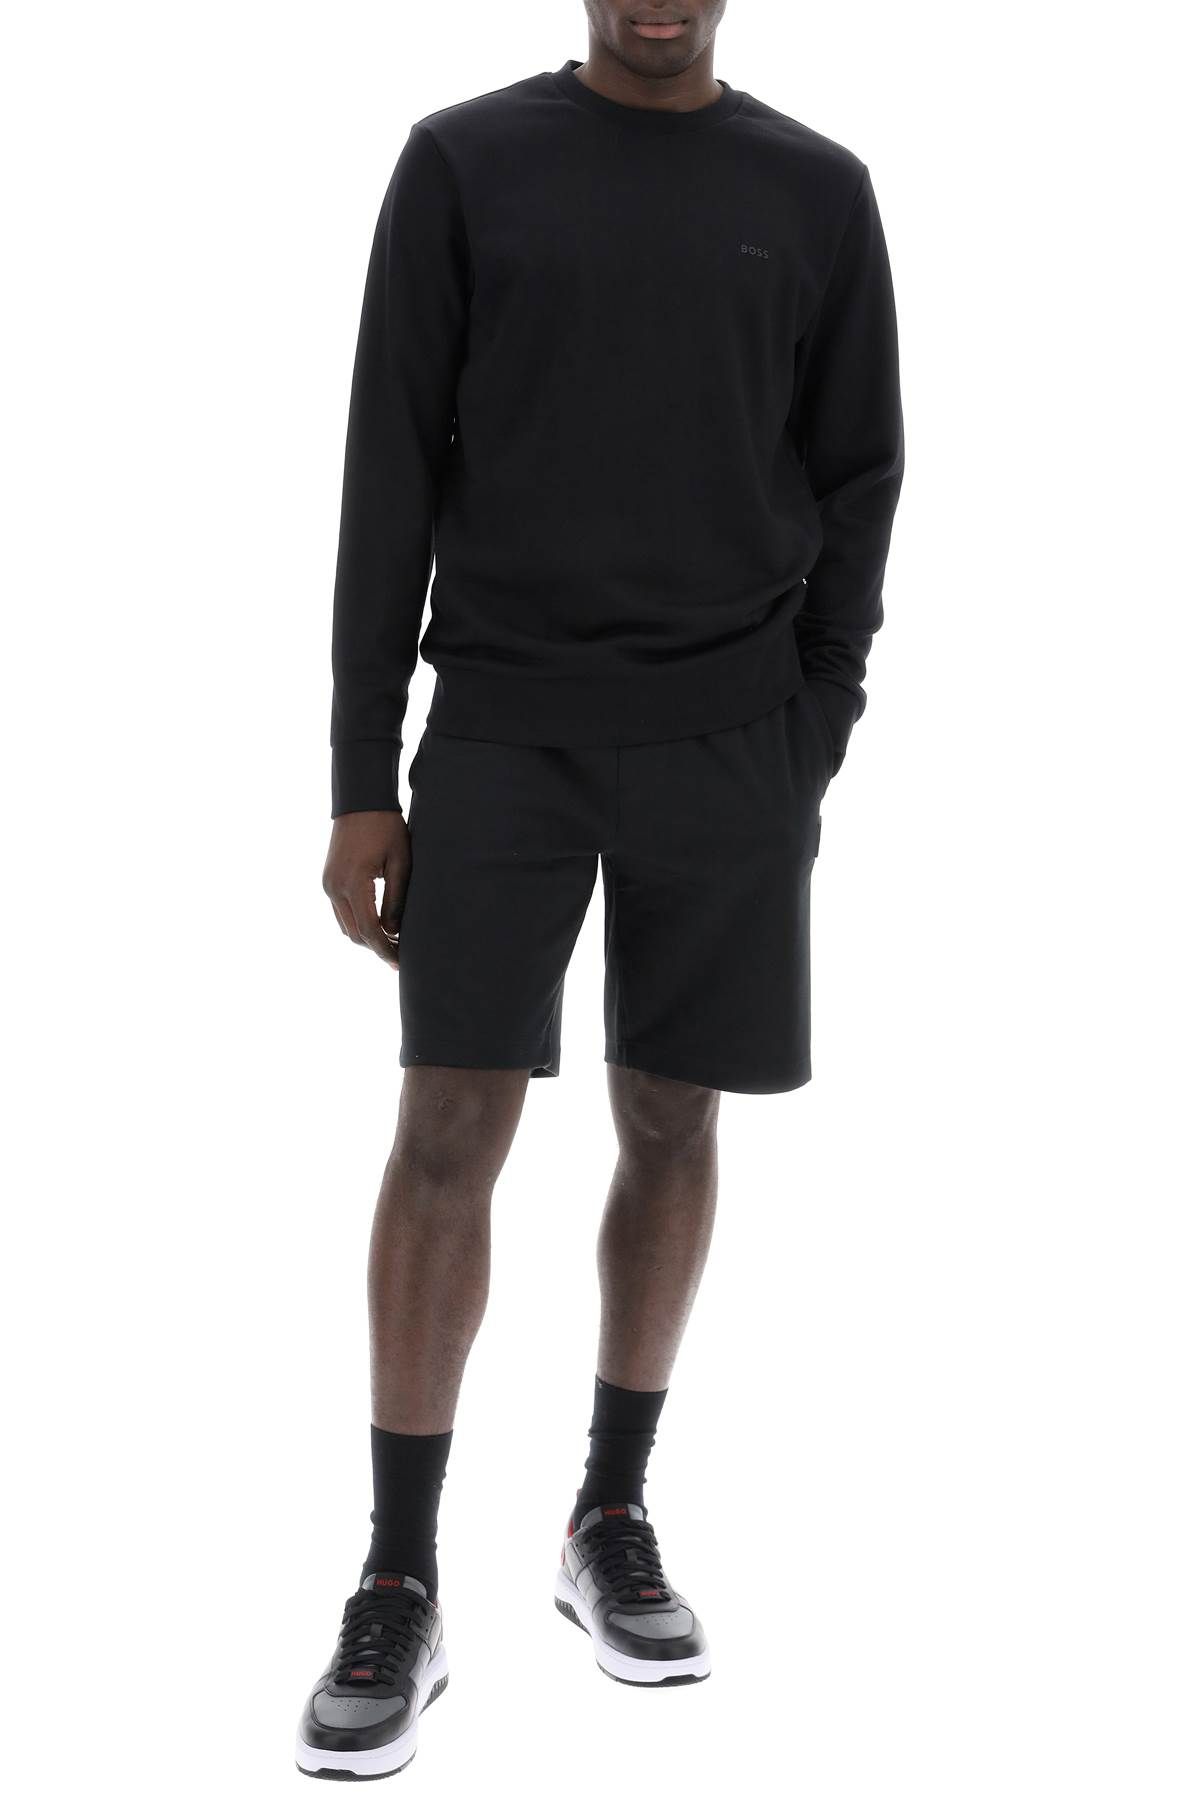 Shop Hugo Boss French Terry Crewneck Sweatshirt In Black